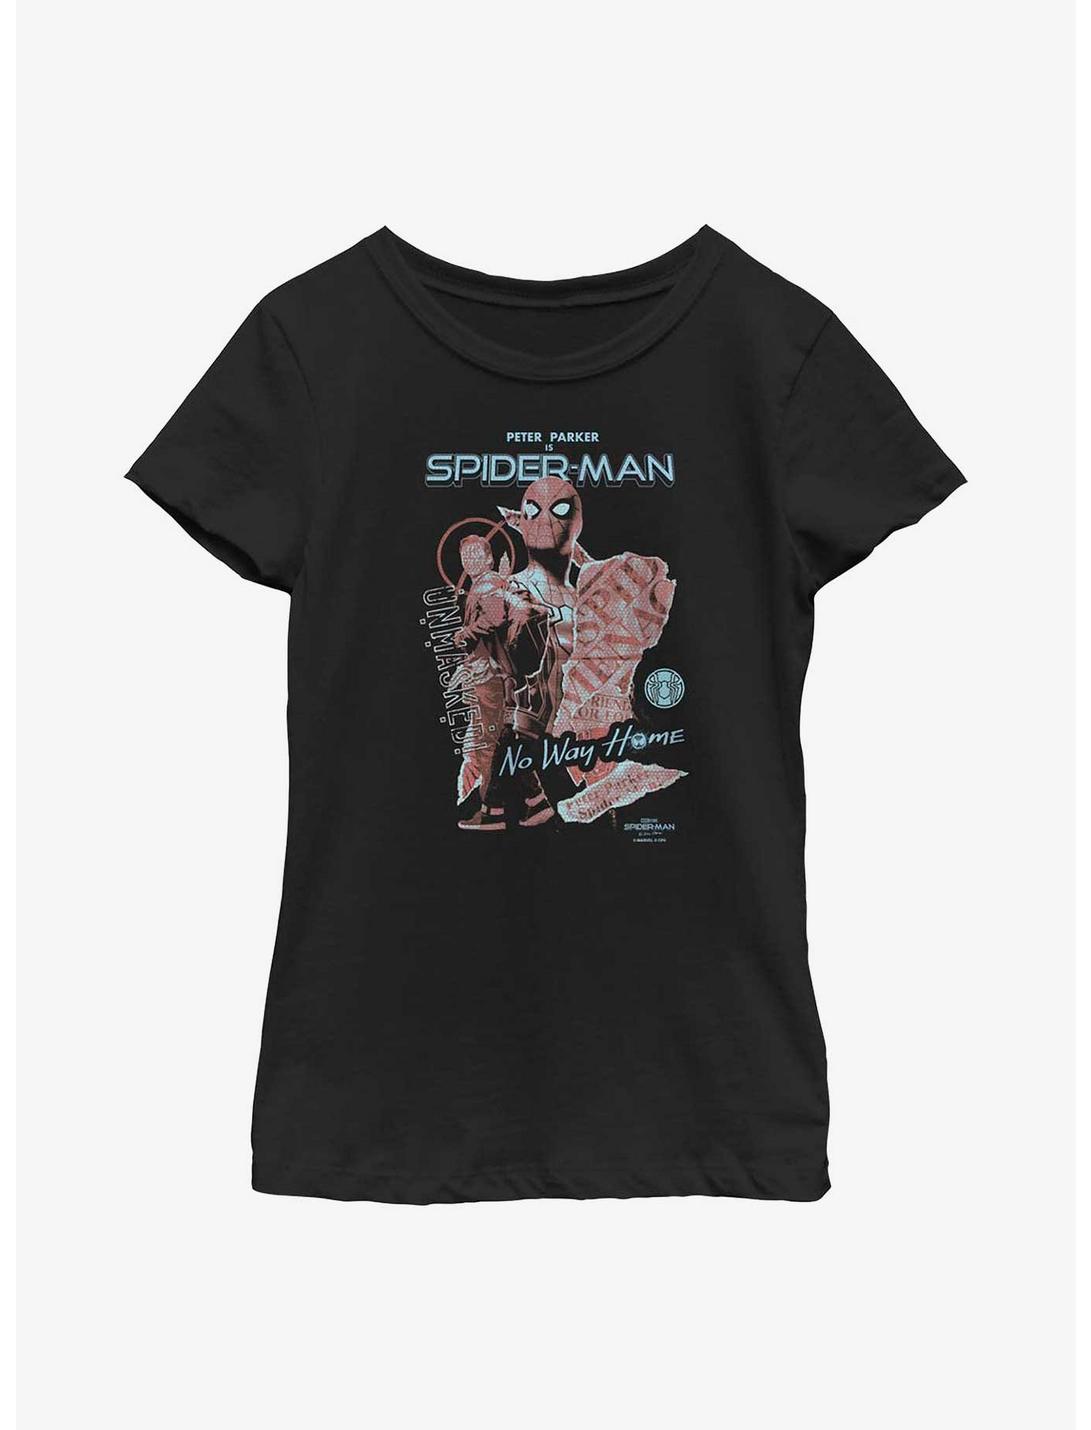 Marvel Spider-Man: No Way Home Unmasked Cover Youth Girls T-Shirt, BLACK, hi-res